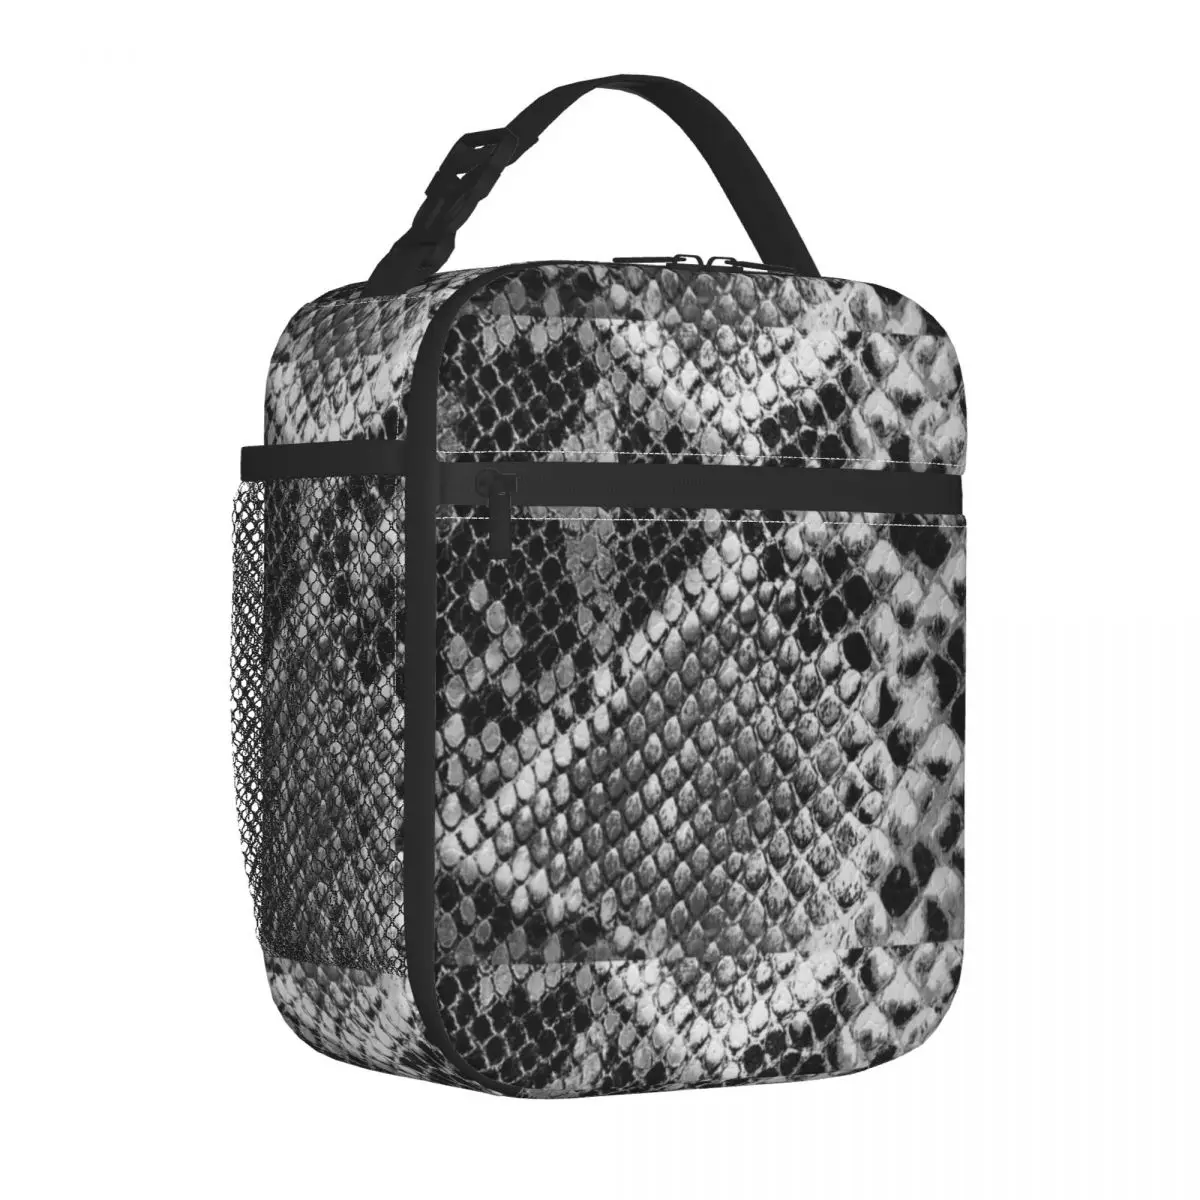 

Black And Gray Snakeskin Lunch Bag Classic Animal Skin Print Beautiful Mesh Pocket Cooler Bag Carry Camping Meal Thermal Bag